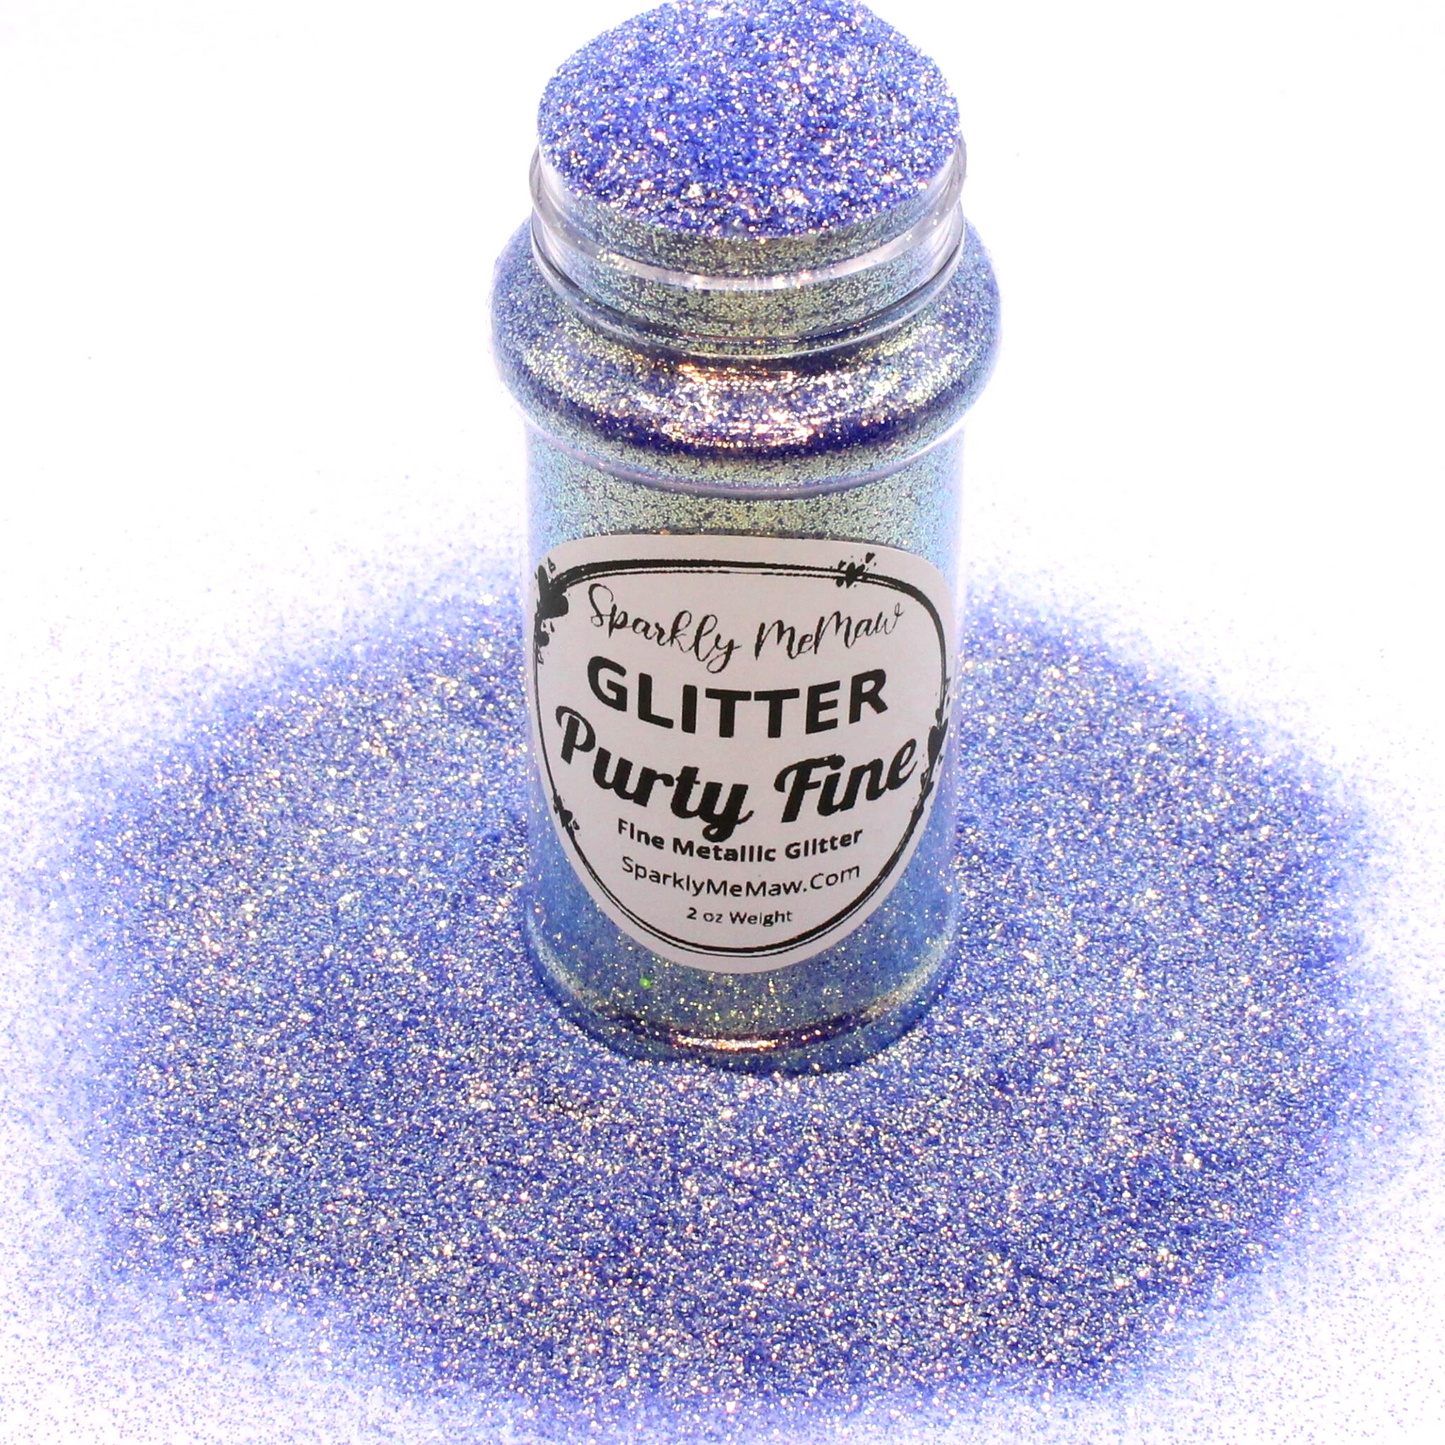 Purty Fine High Sparkle Metallic Glitter